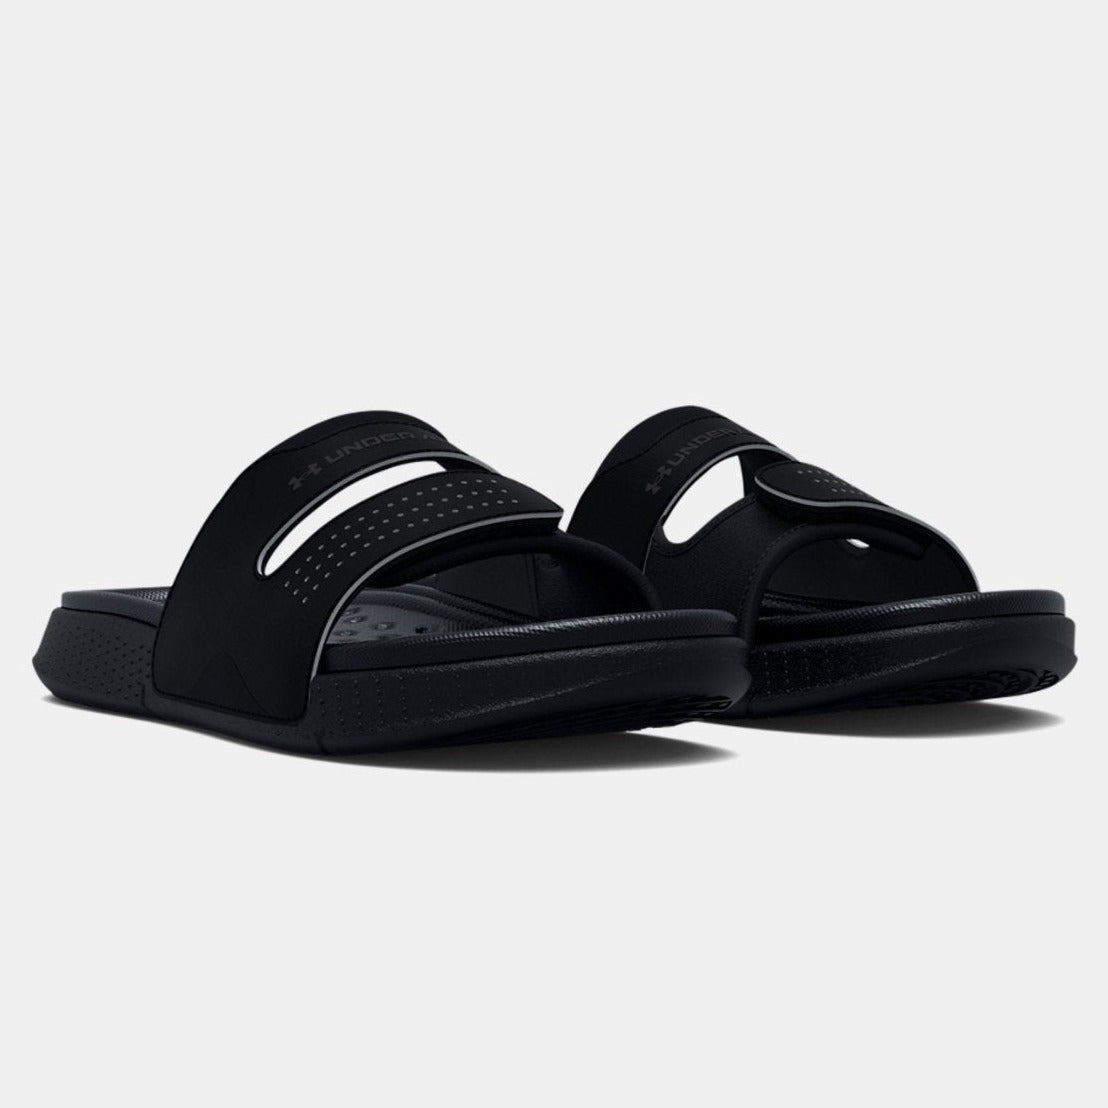 Under Armour Women's Ansa Studio Slide Sandals 3025045-001 - Black